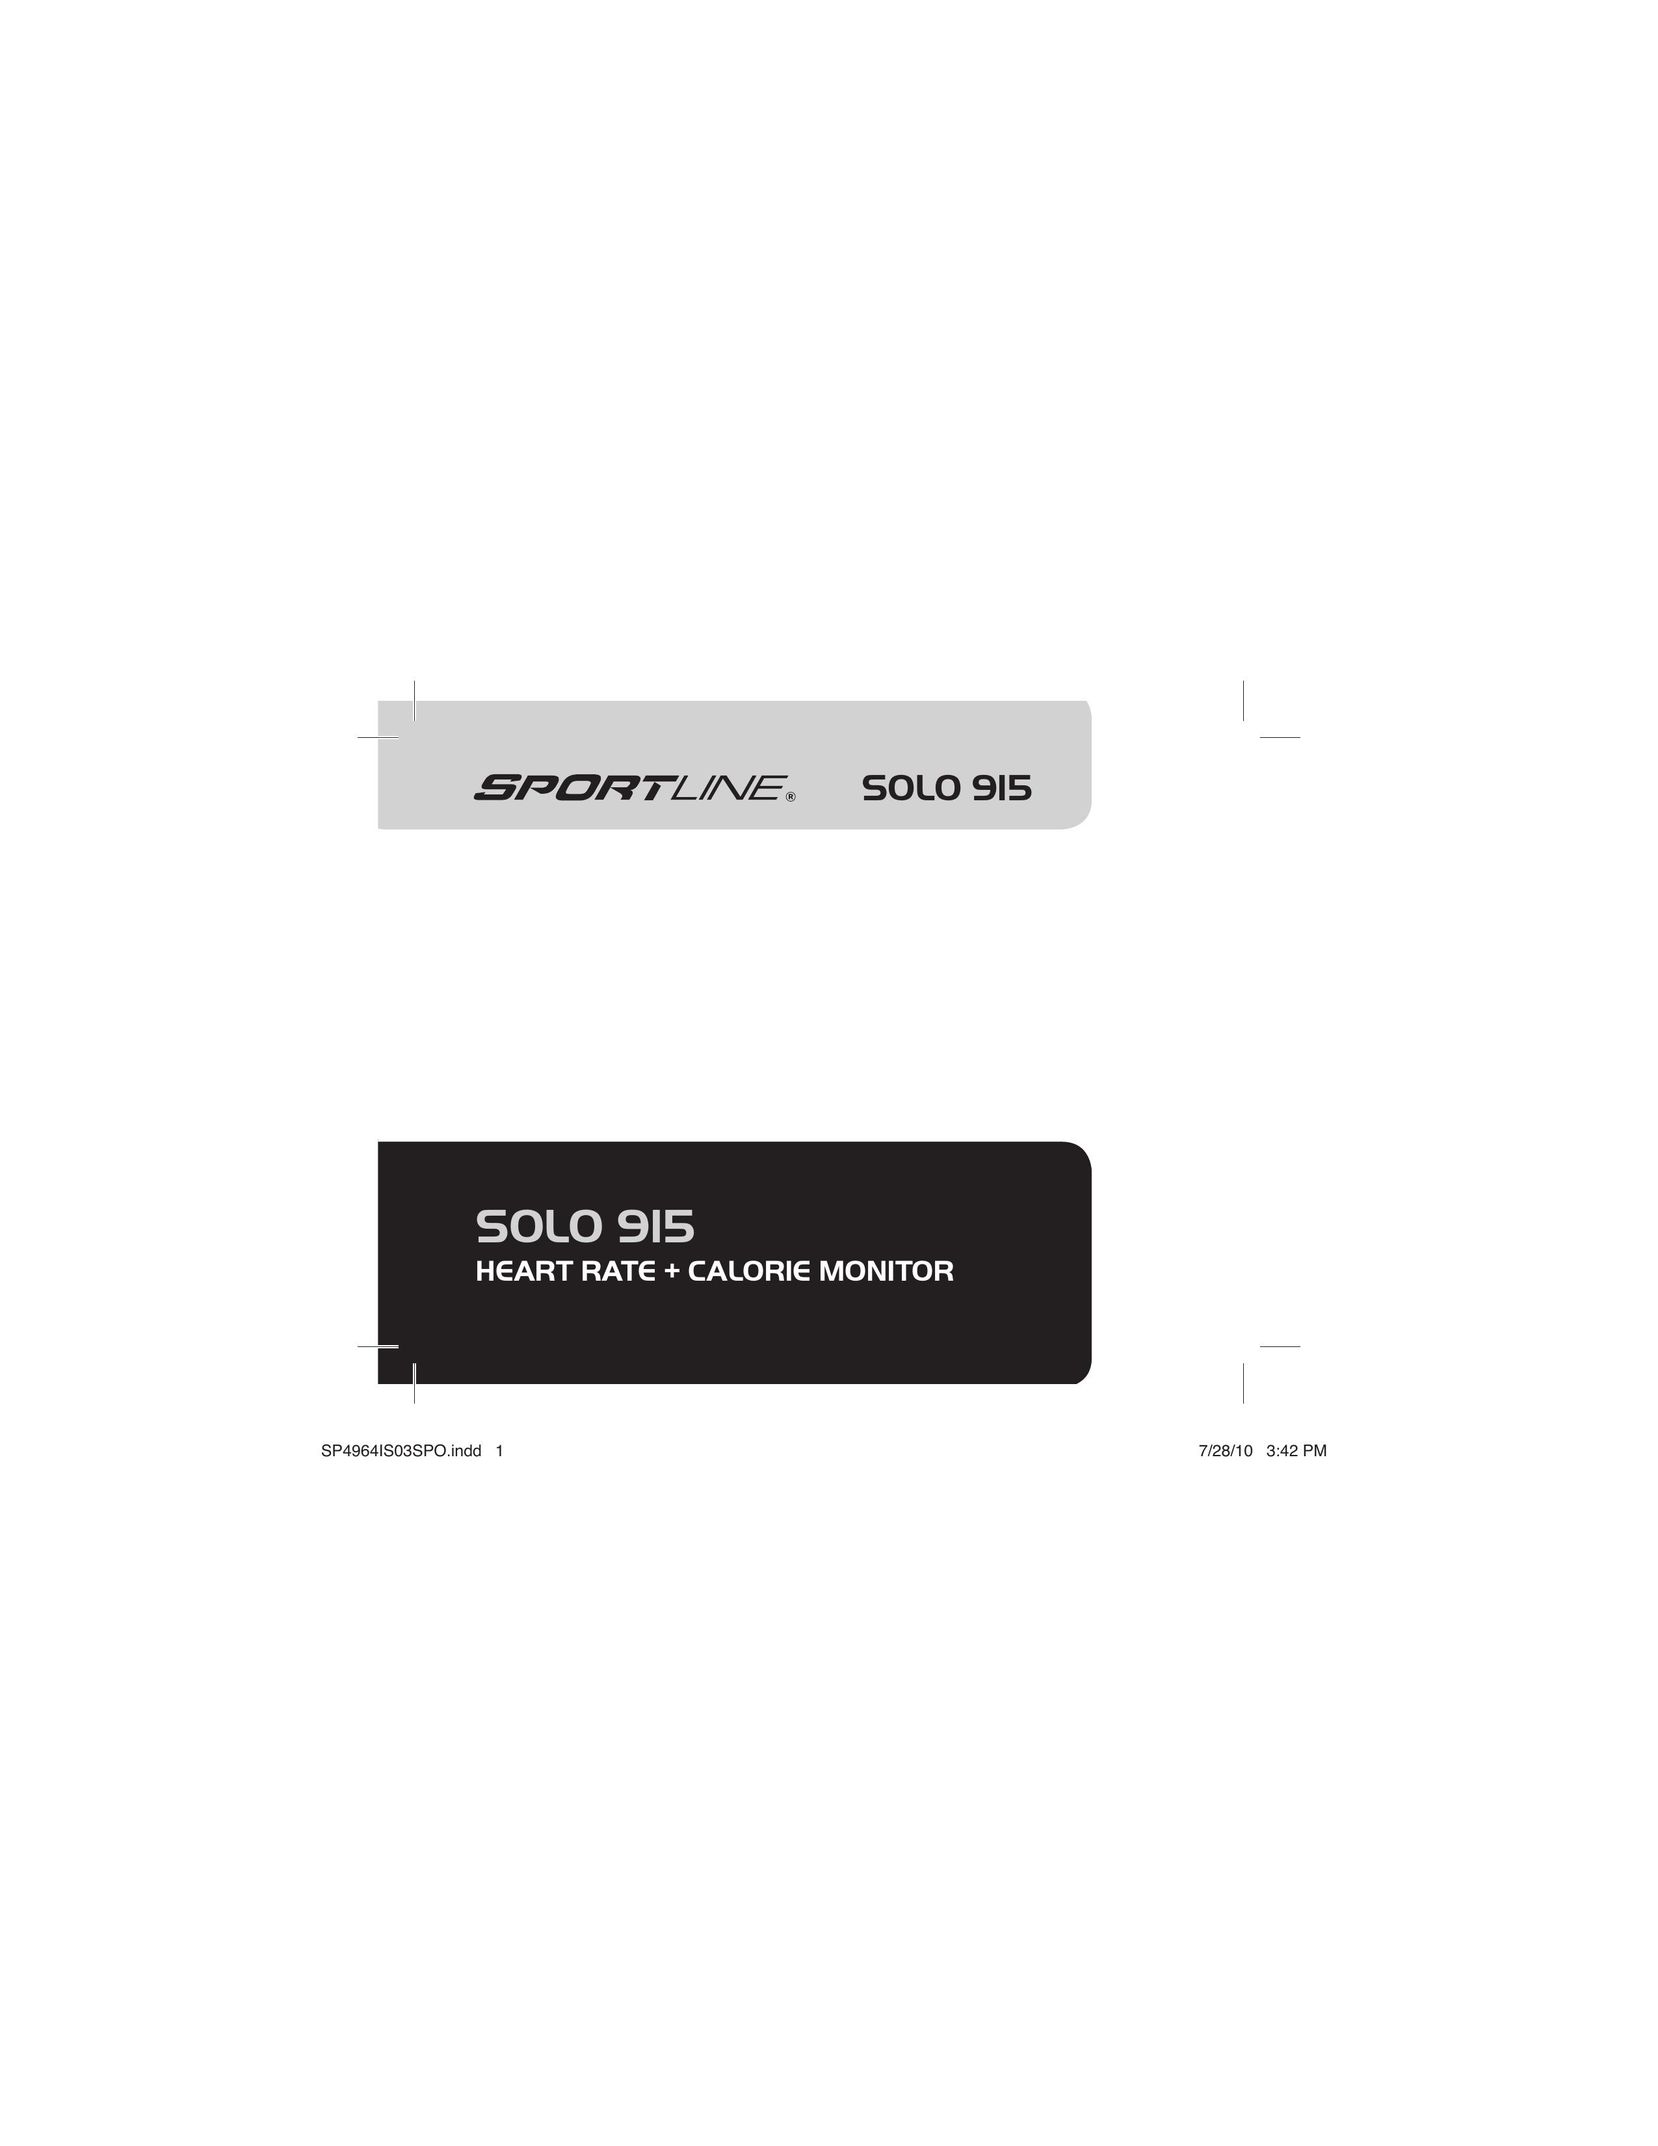 Sportline Solo 915 Cyclometer User Manual